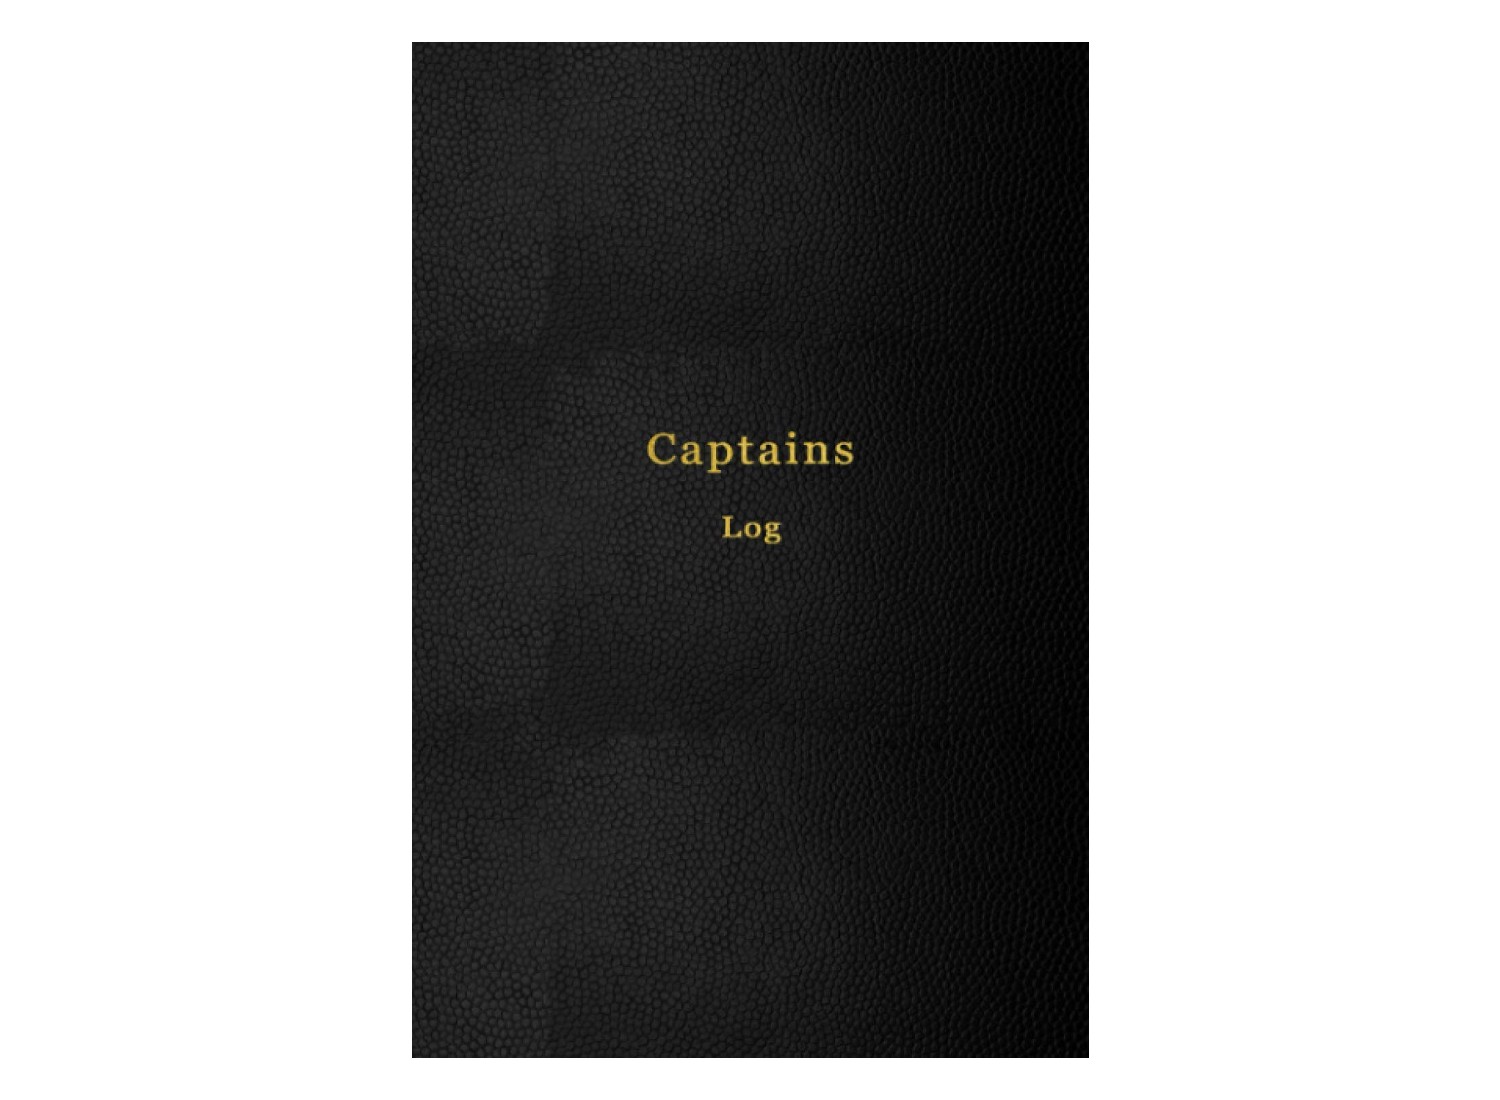 captains log review